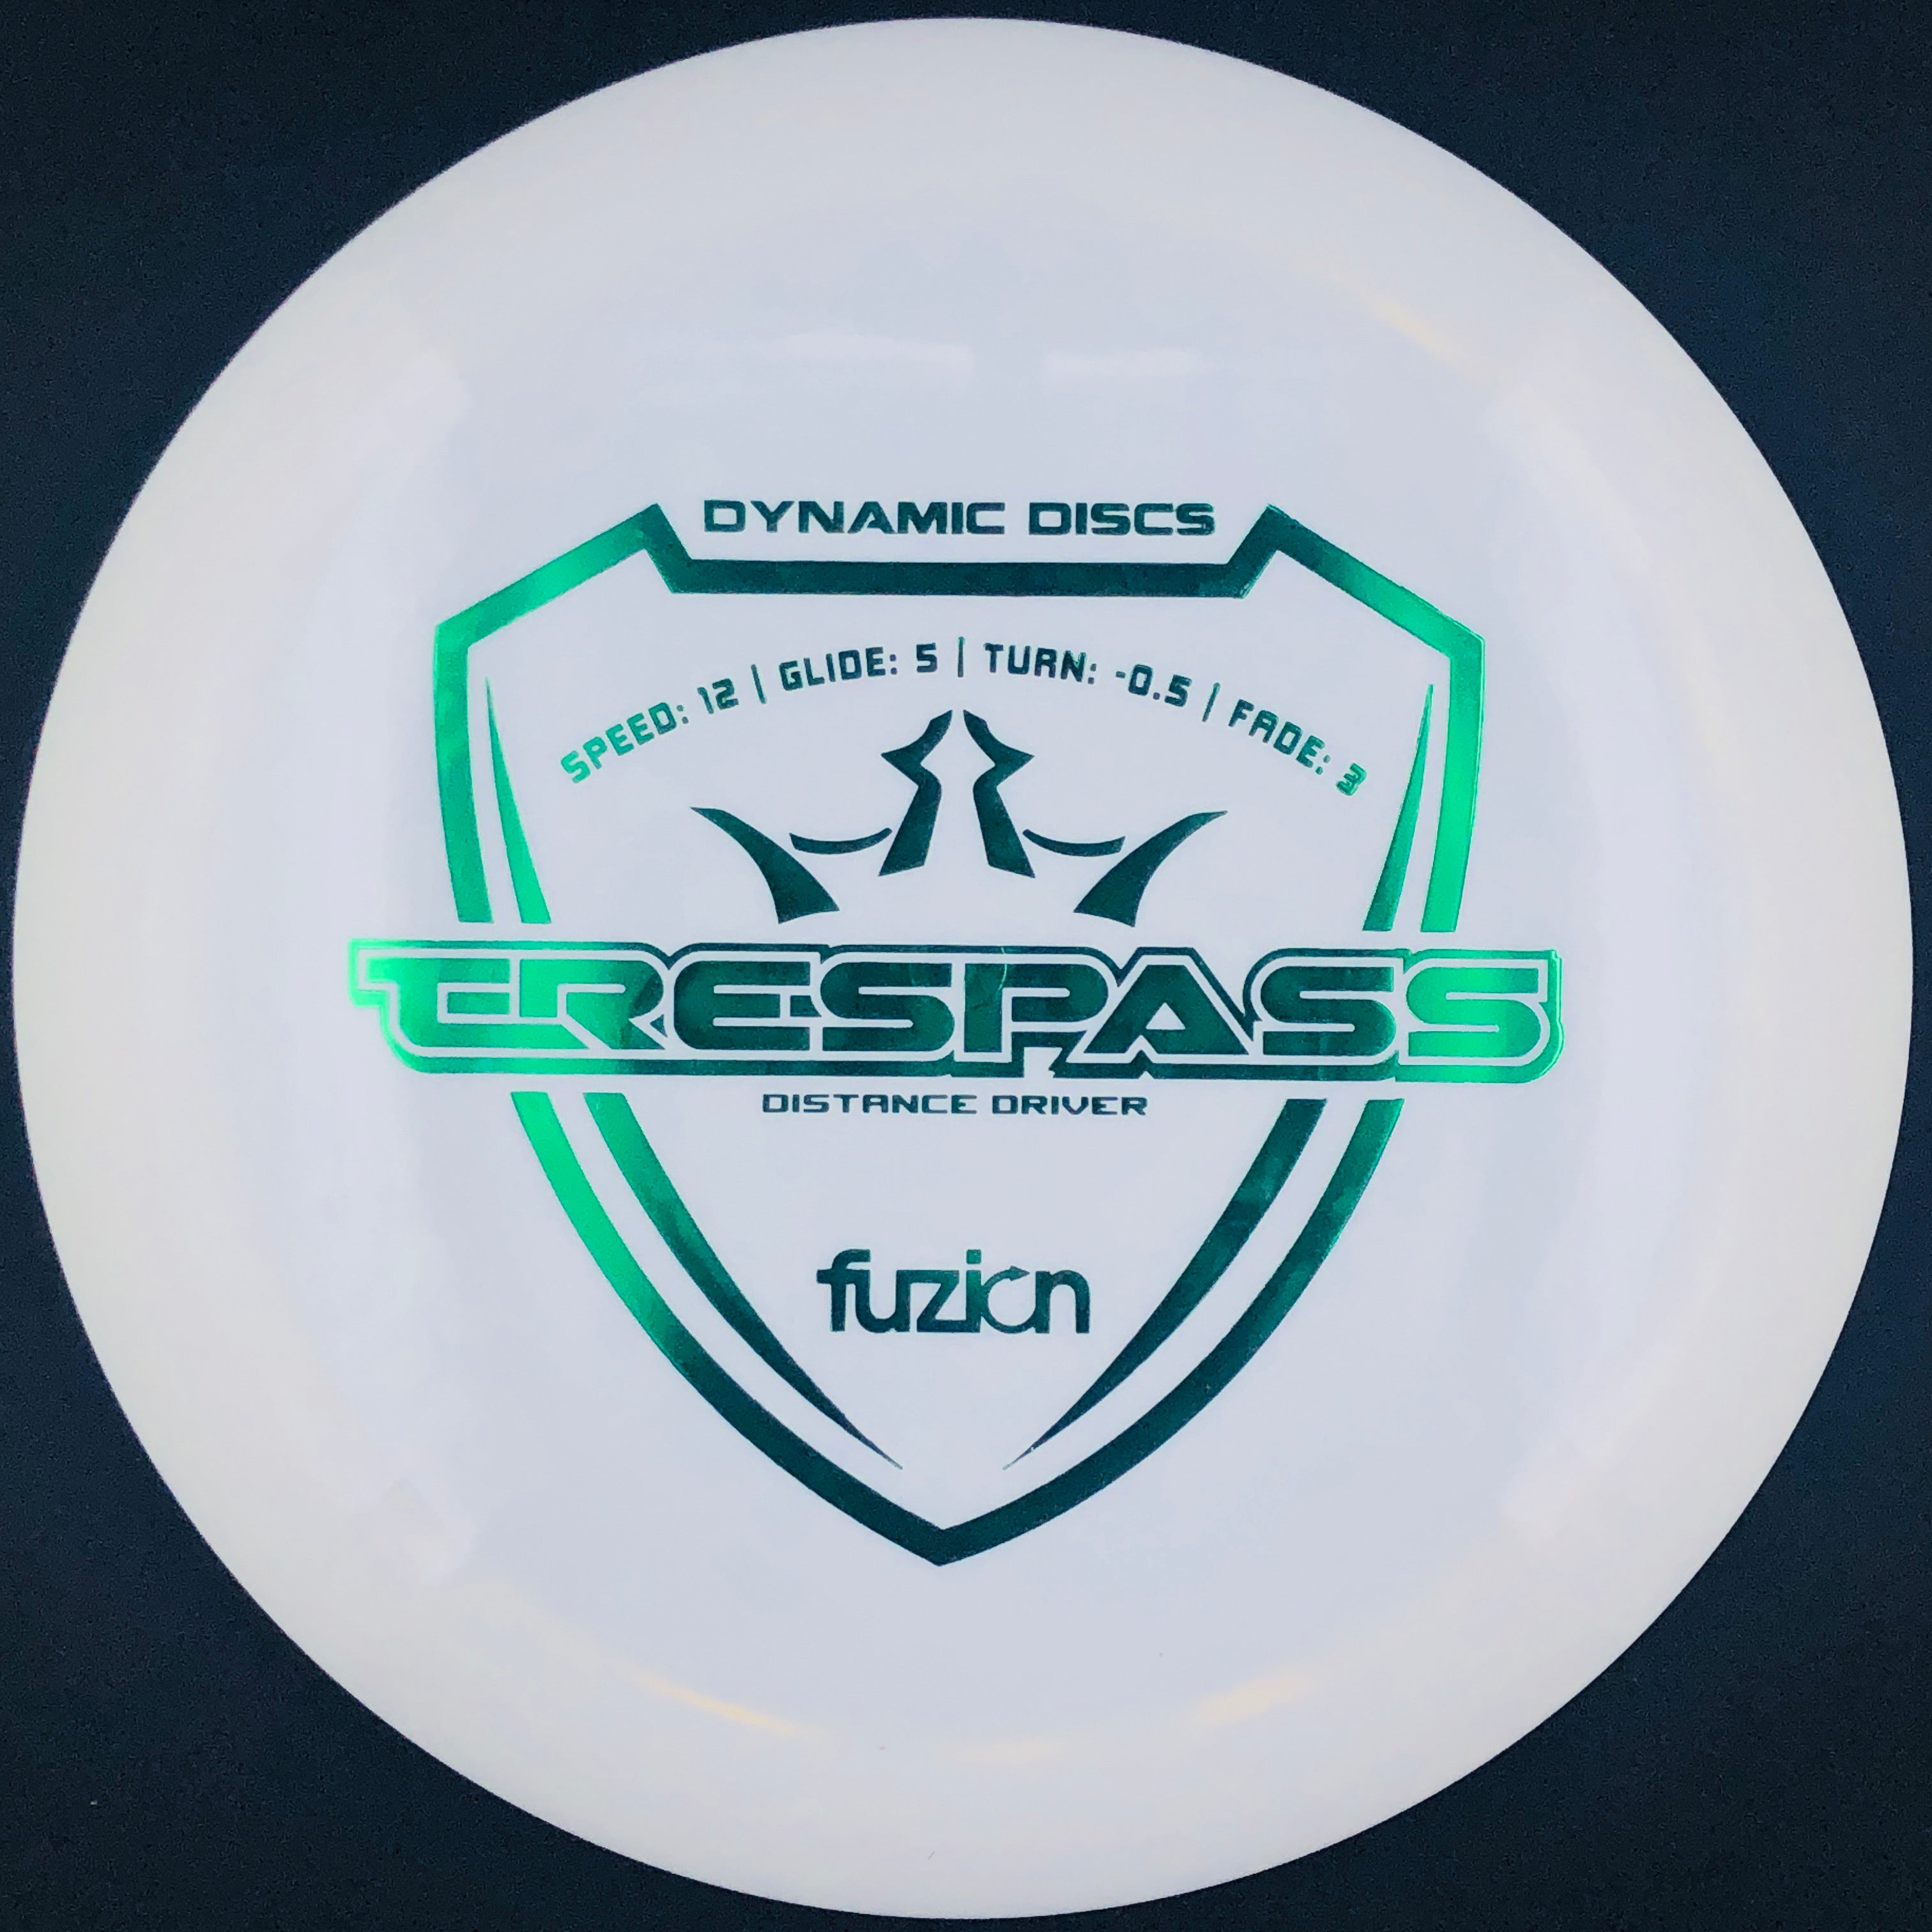 Dynamic Discs Fuzion Trespass (Distance Driver)